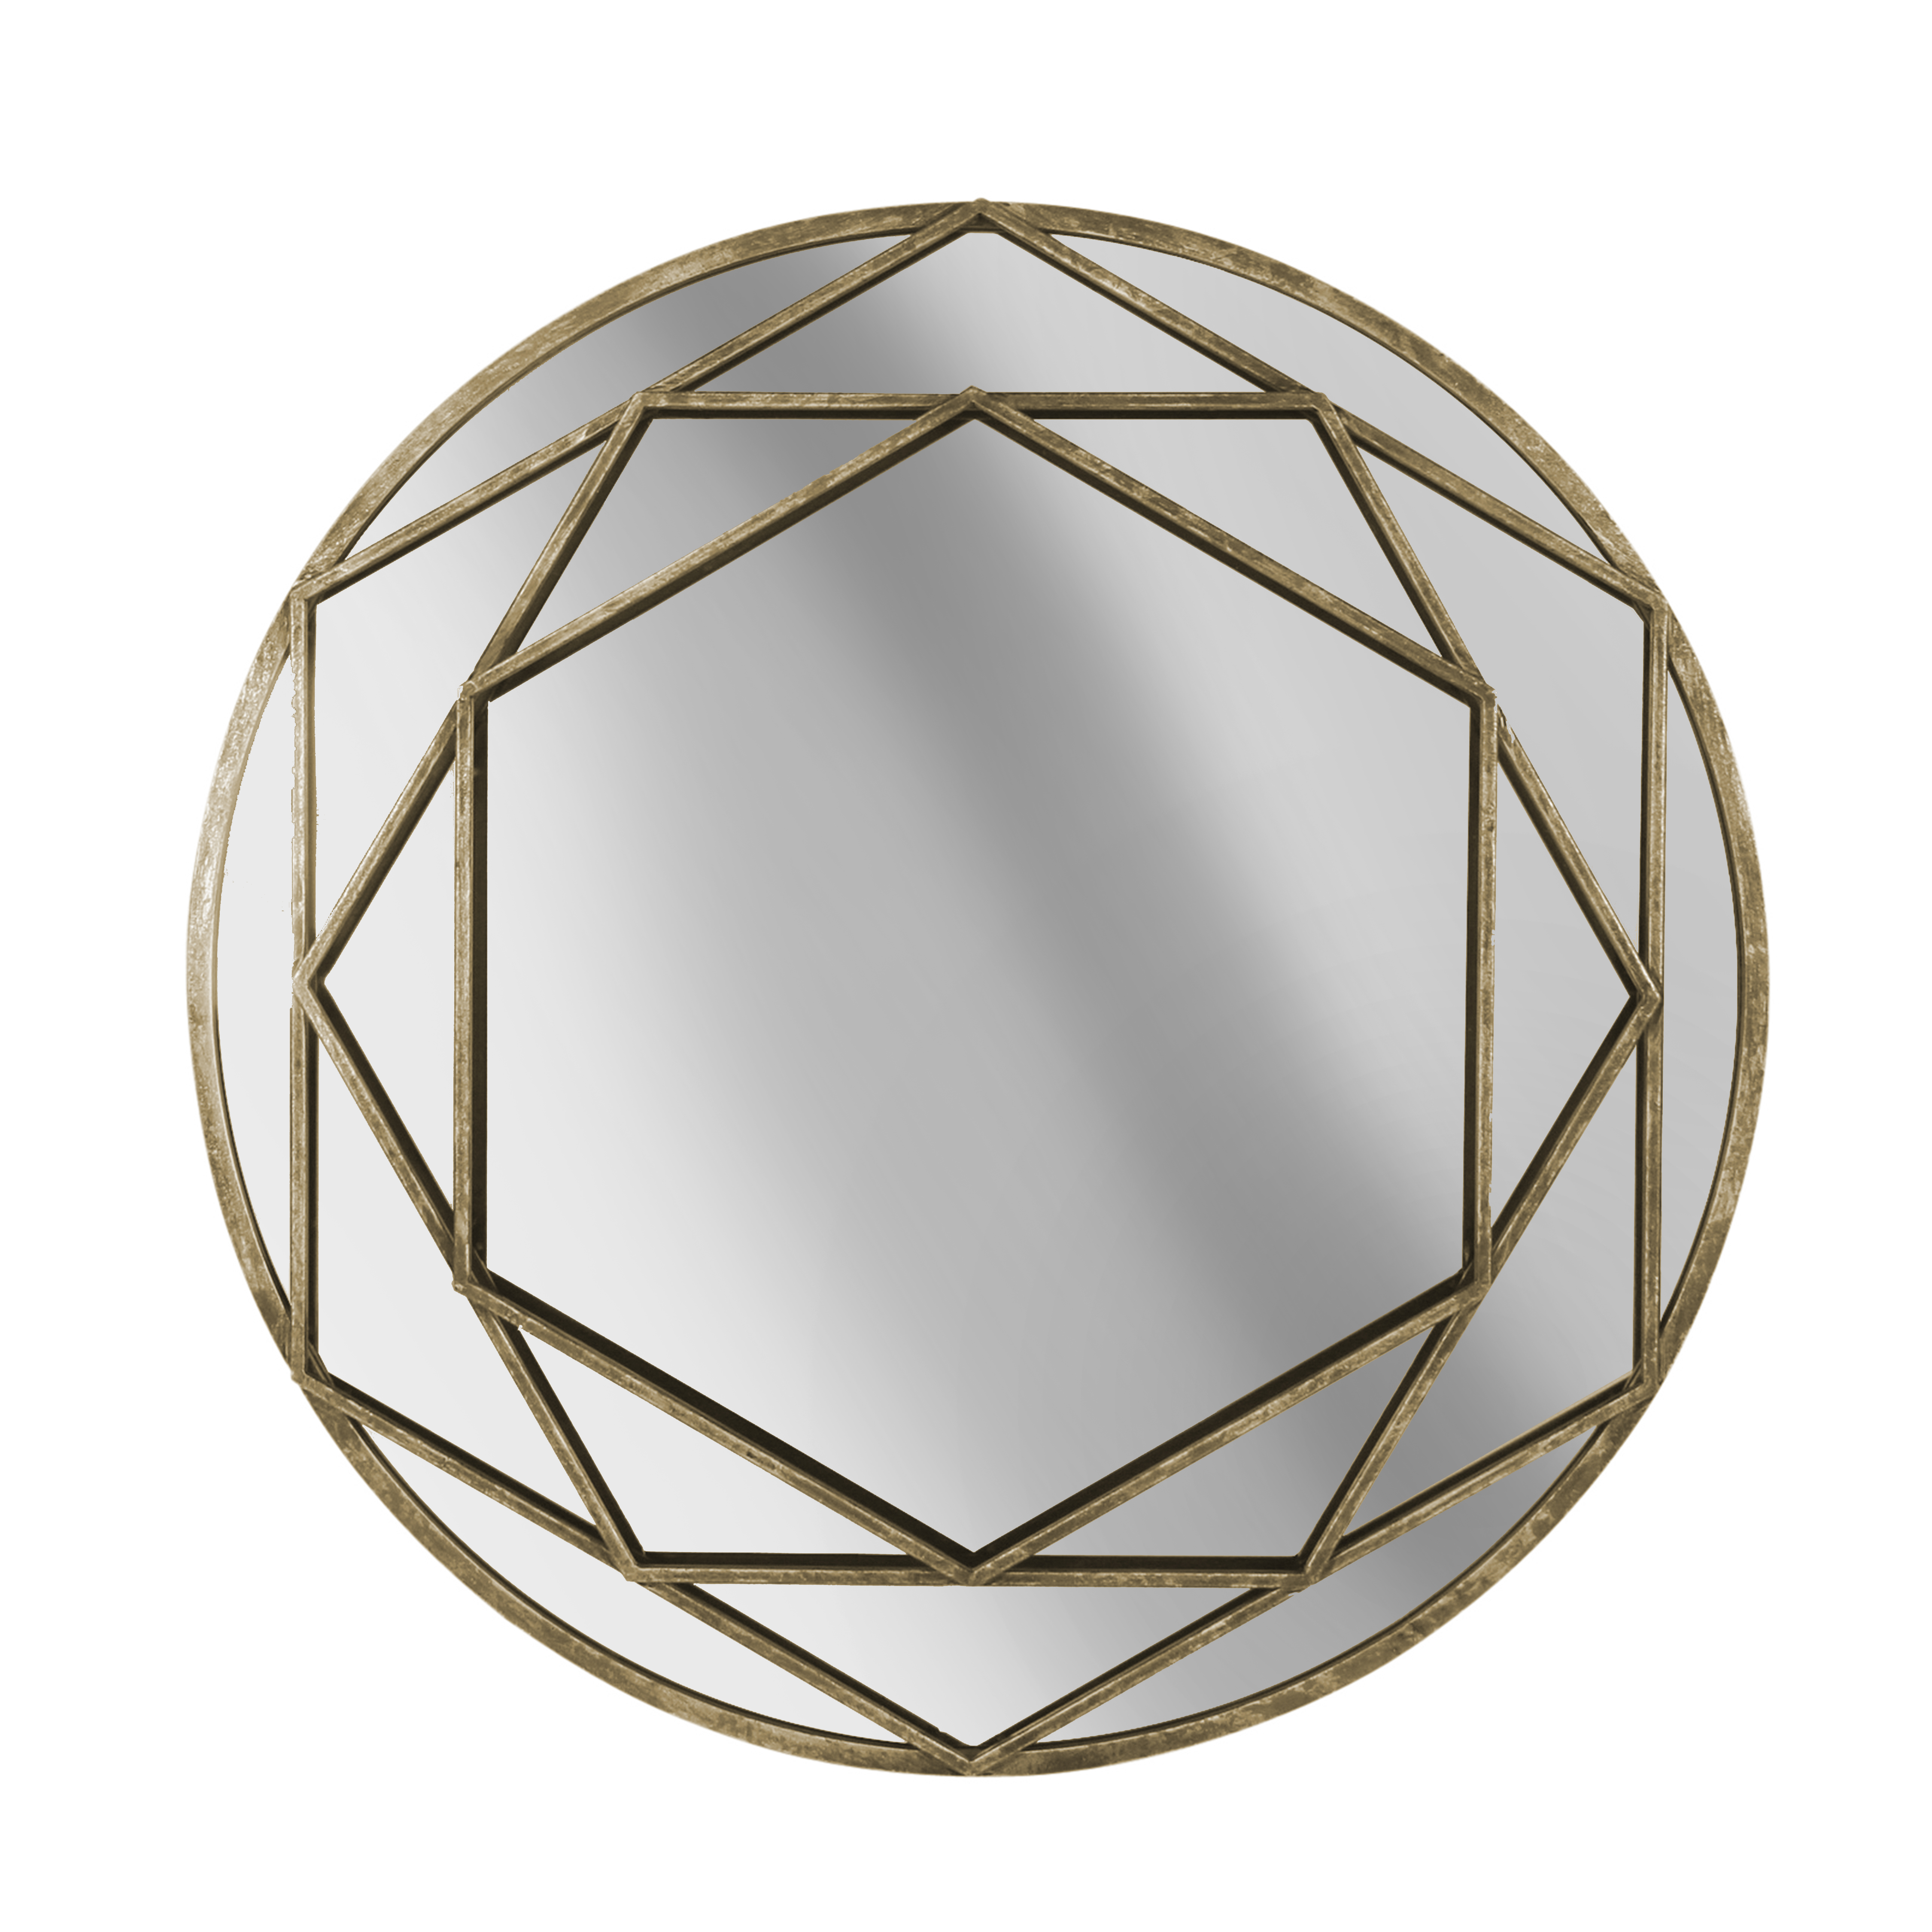 Sagebrook Home gold multi hexagonal mirror